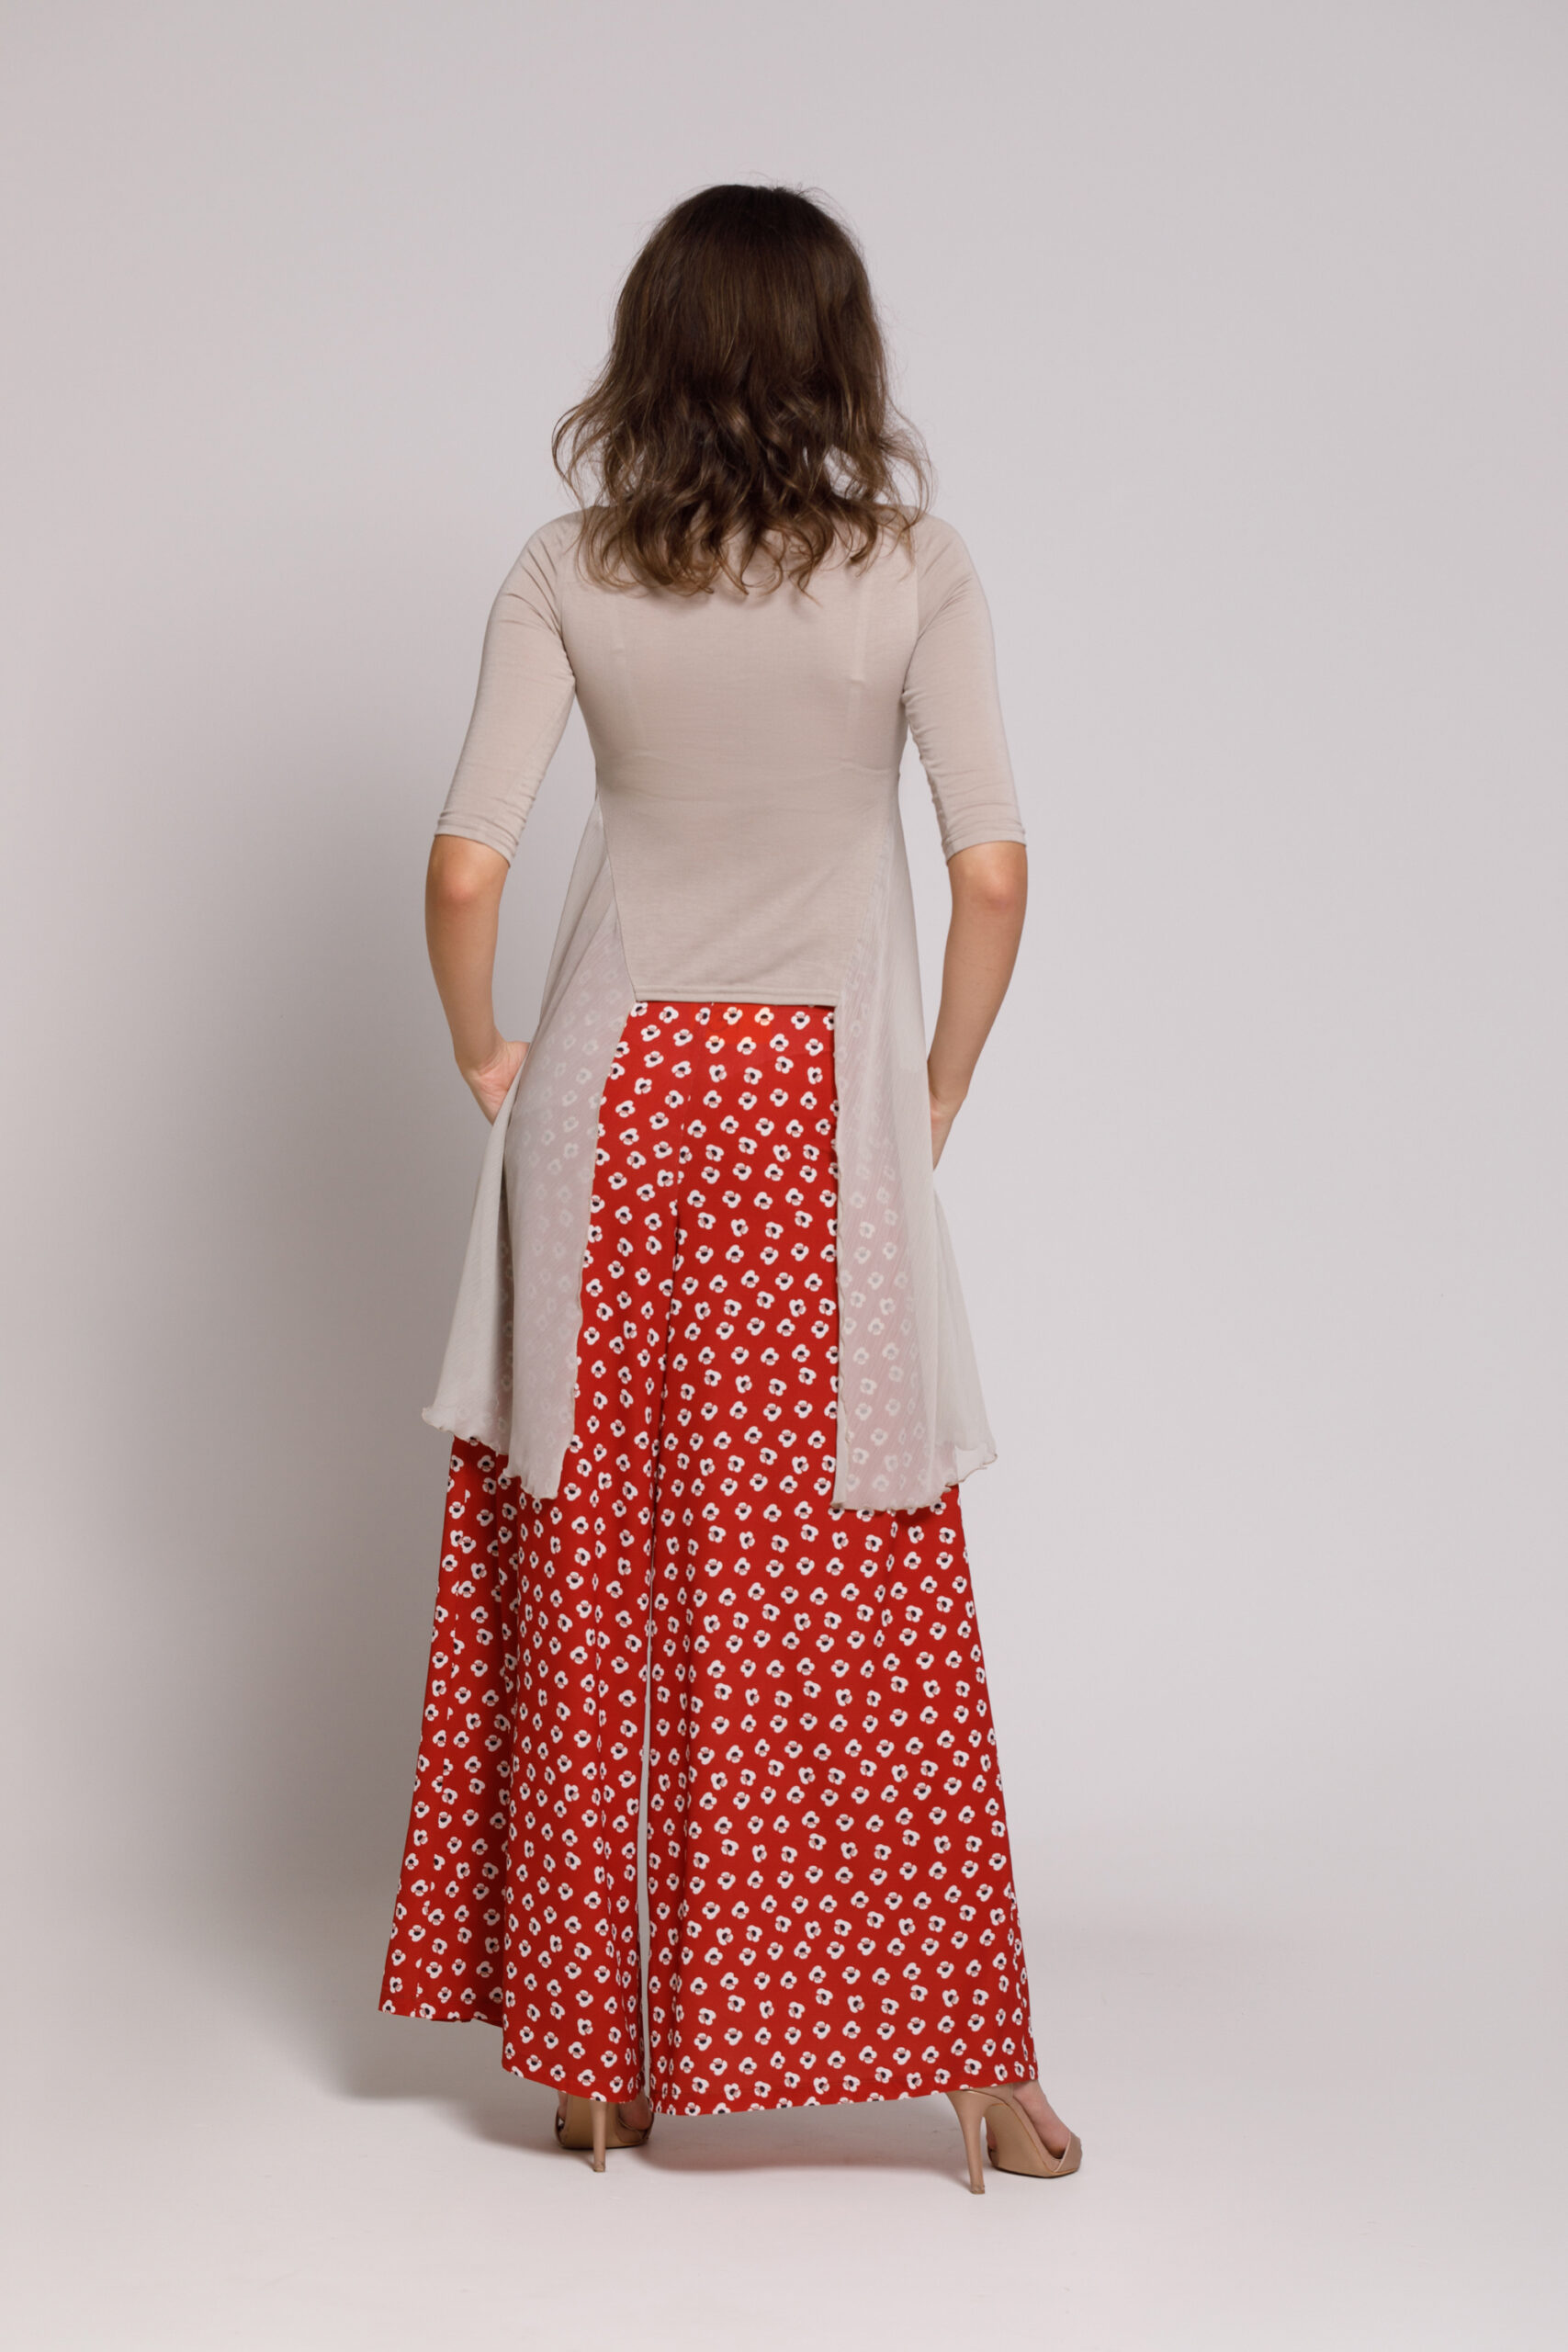 USTIN casual viscose pants with brick floral print. Natural fabrics, original design, handmade embroidery